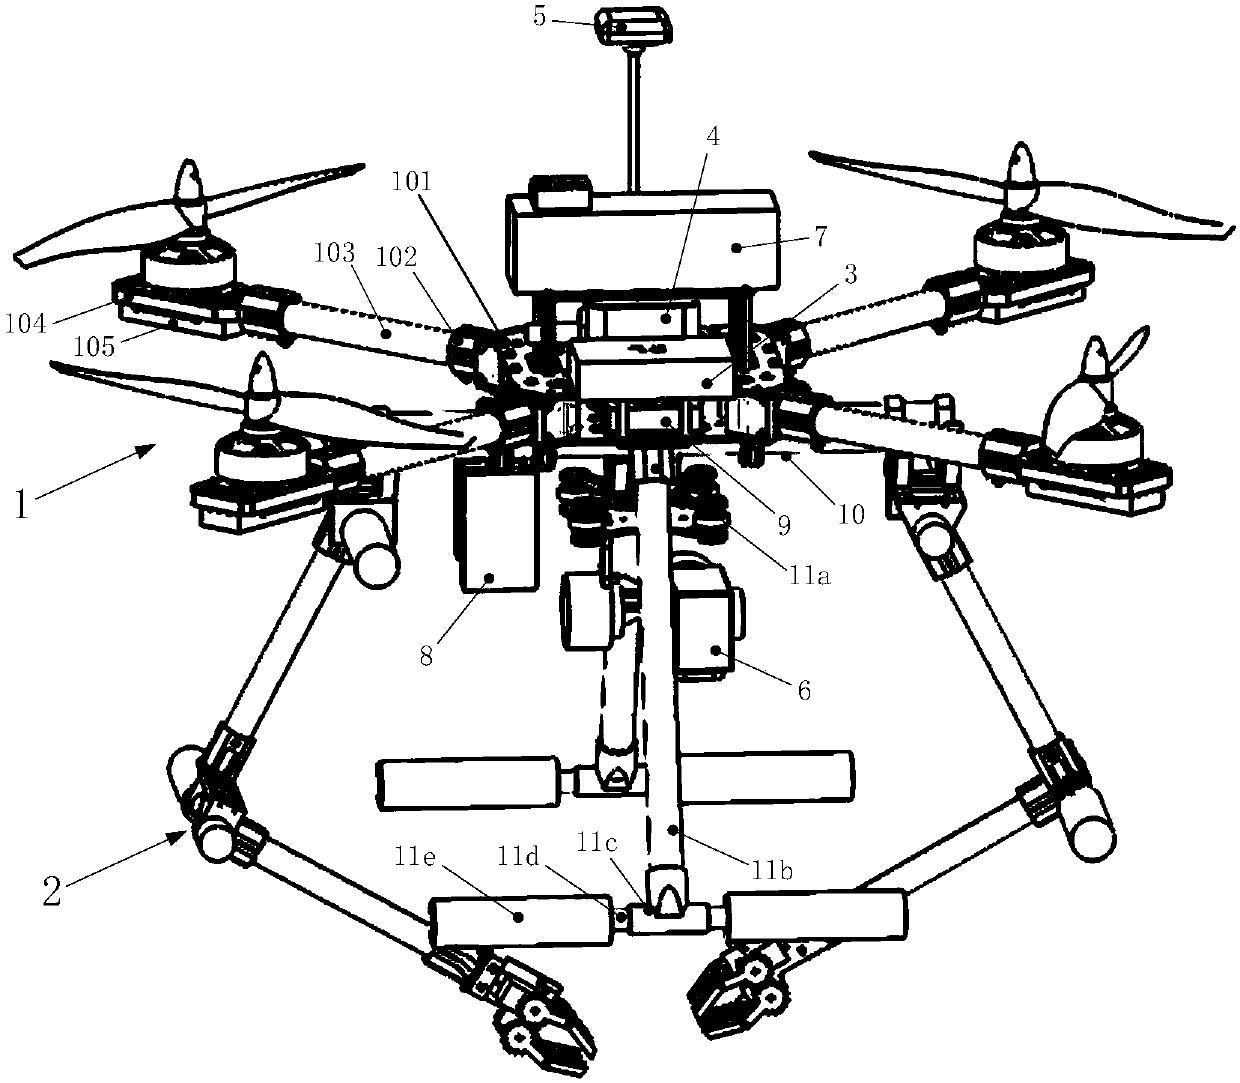 Imitation eagle grabbing system of air-operated multi-rotor aircraft